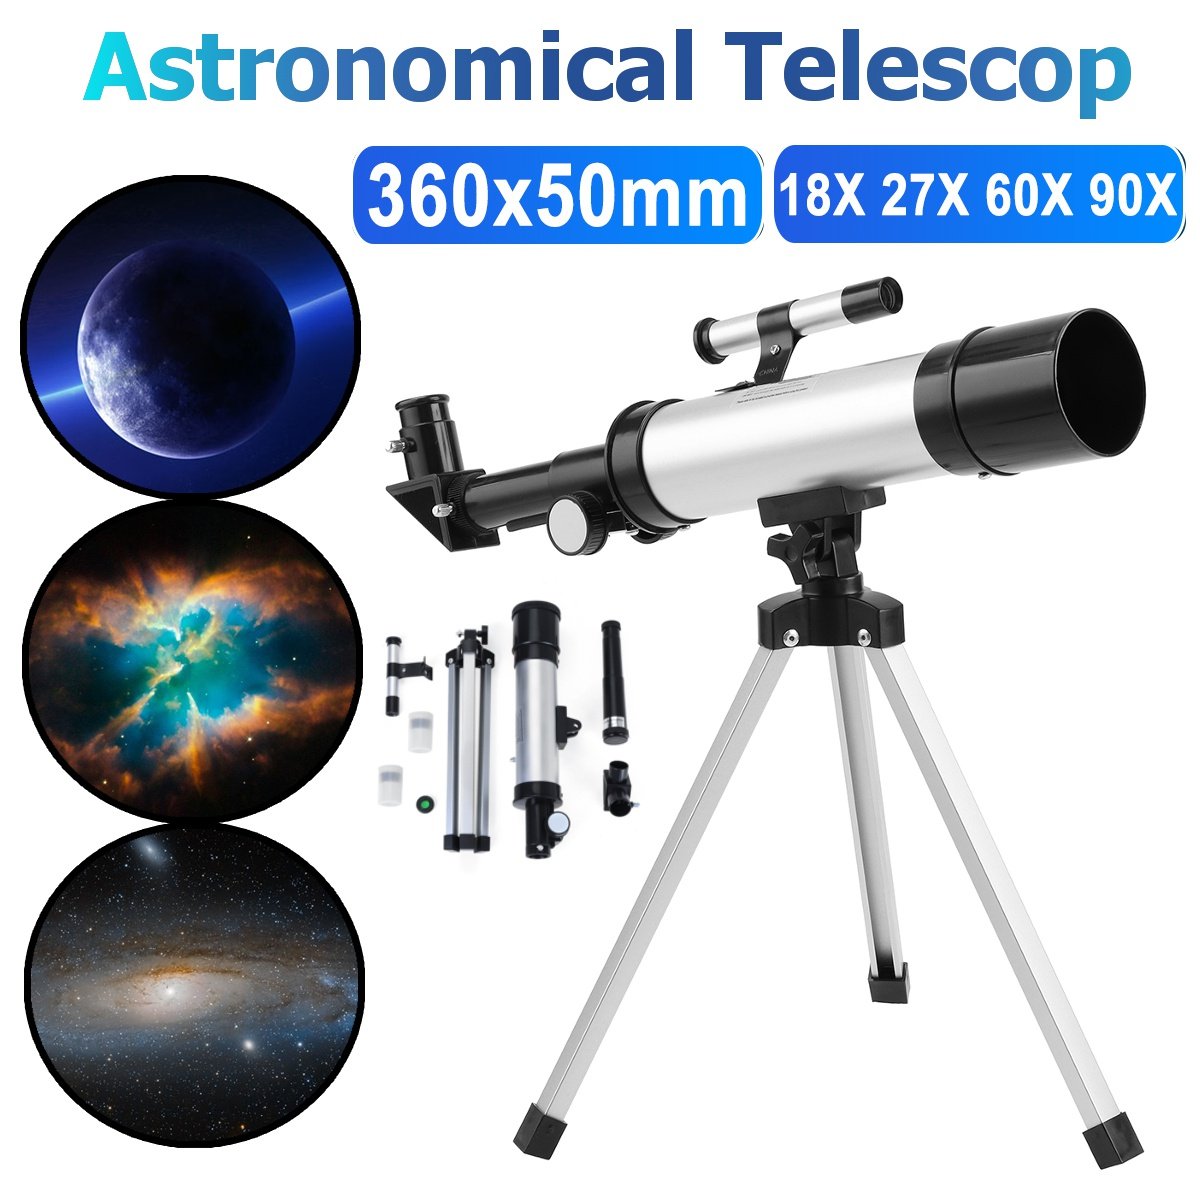 90X Refractor Telescope Adjustable Tripod Compact Travel Astronomy 360x50mm UK 